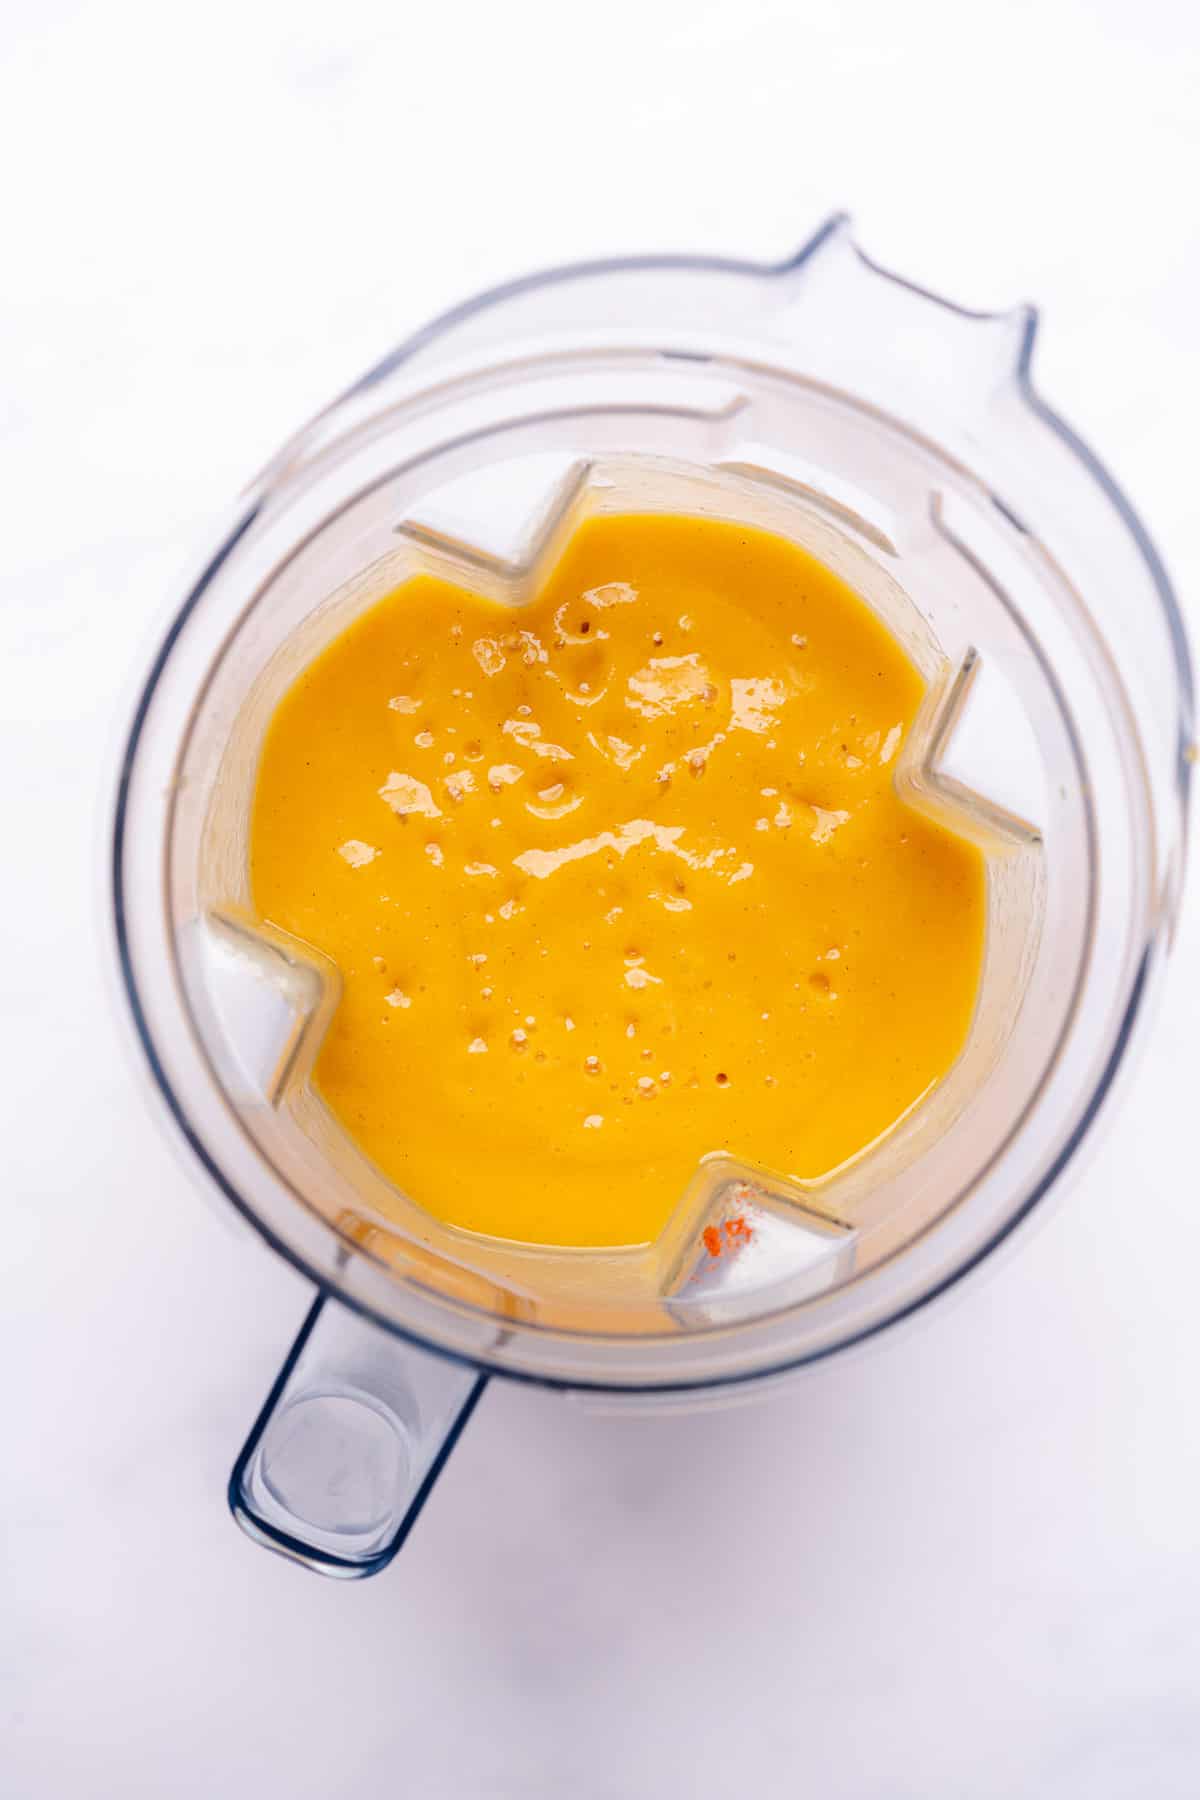 pureed mango habanero sauce in a blender